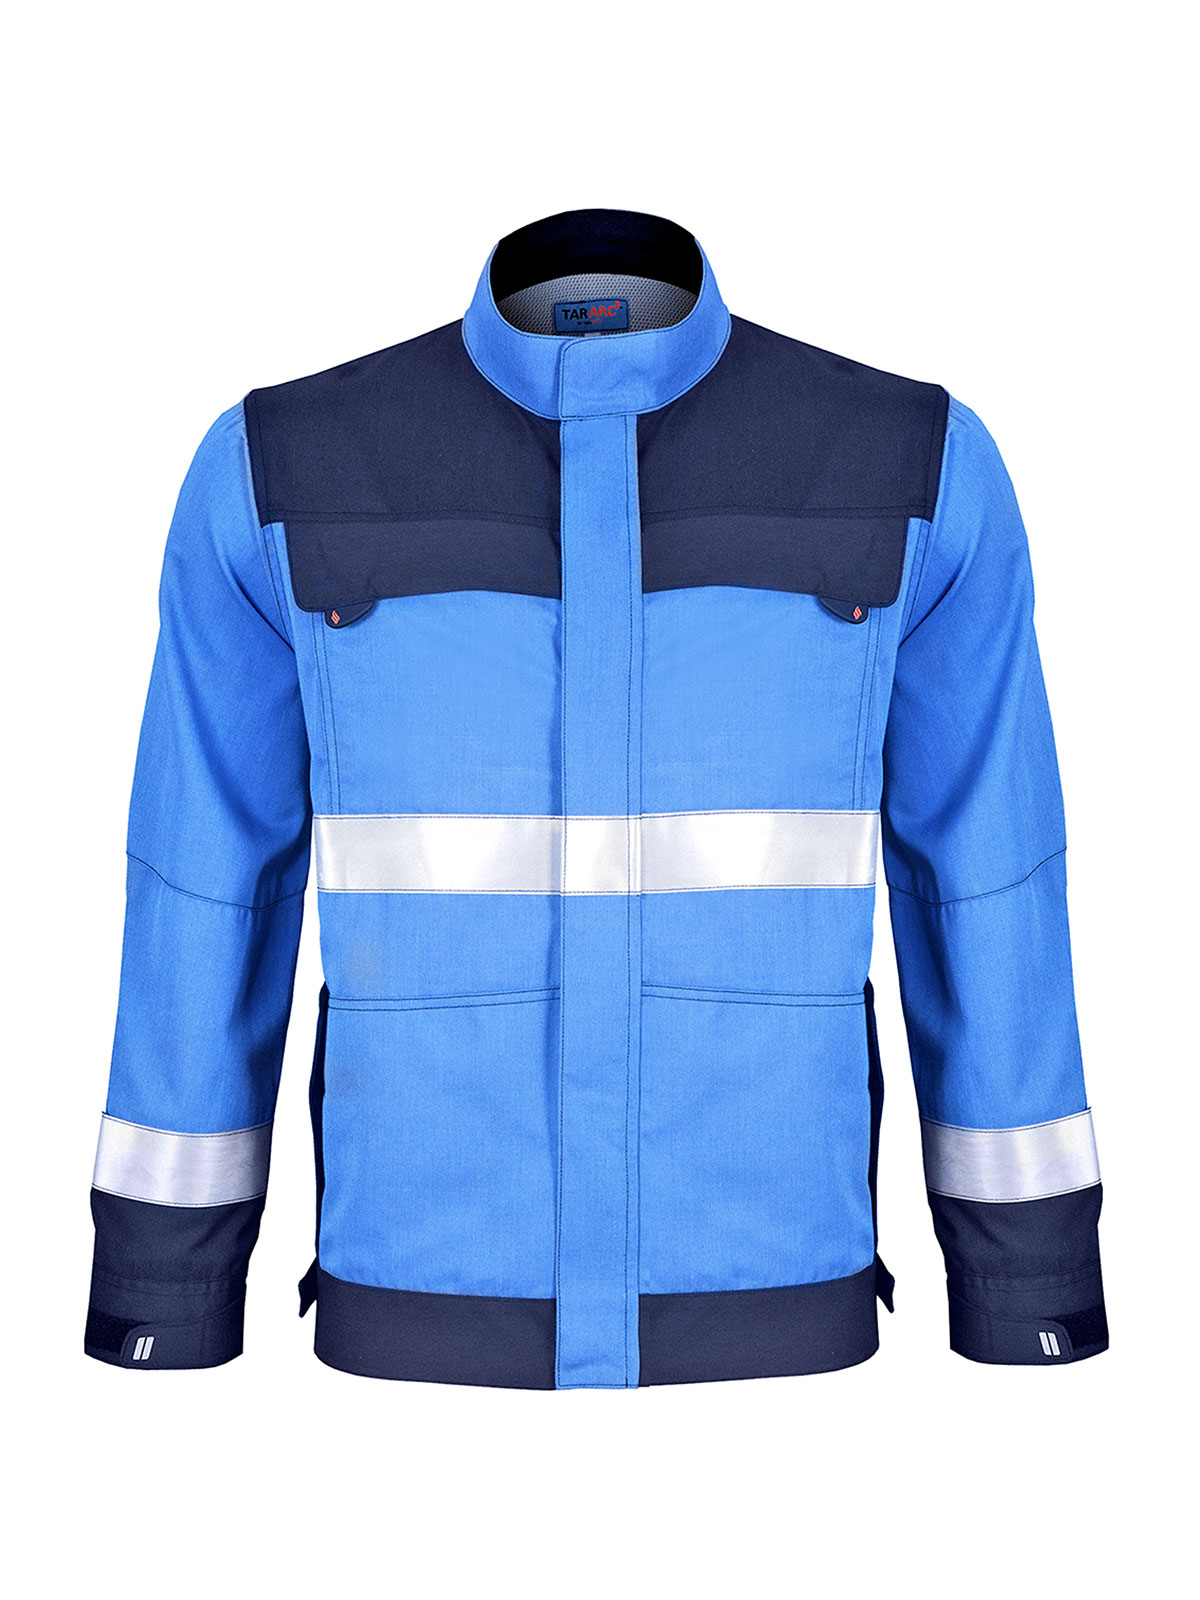 FR Jackets | Safe & Durable Fire Resistant Jackets | Tarasafe Quality